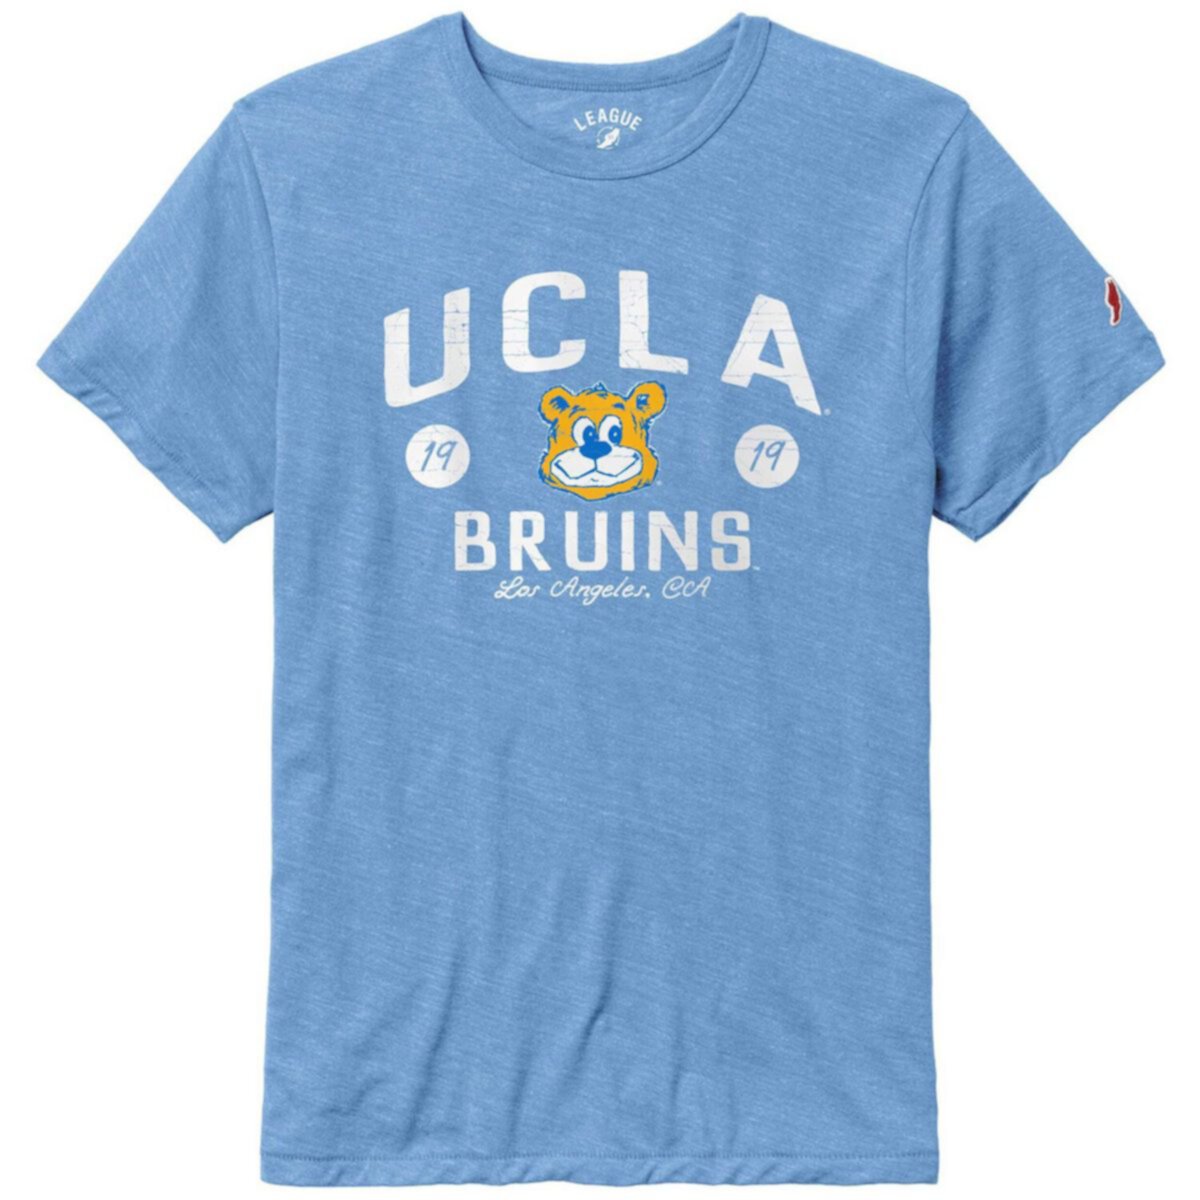 Men's League Collegiate Wear Blue UCLA Bruins Bendy Arch Victory Falls Tri-Blend T-Shirt League Collegiate Wear